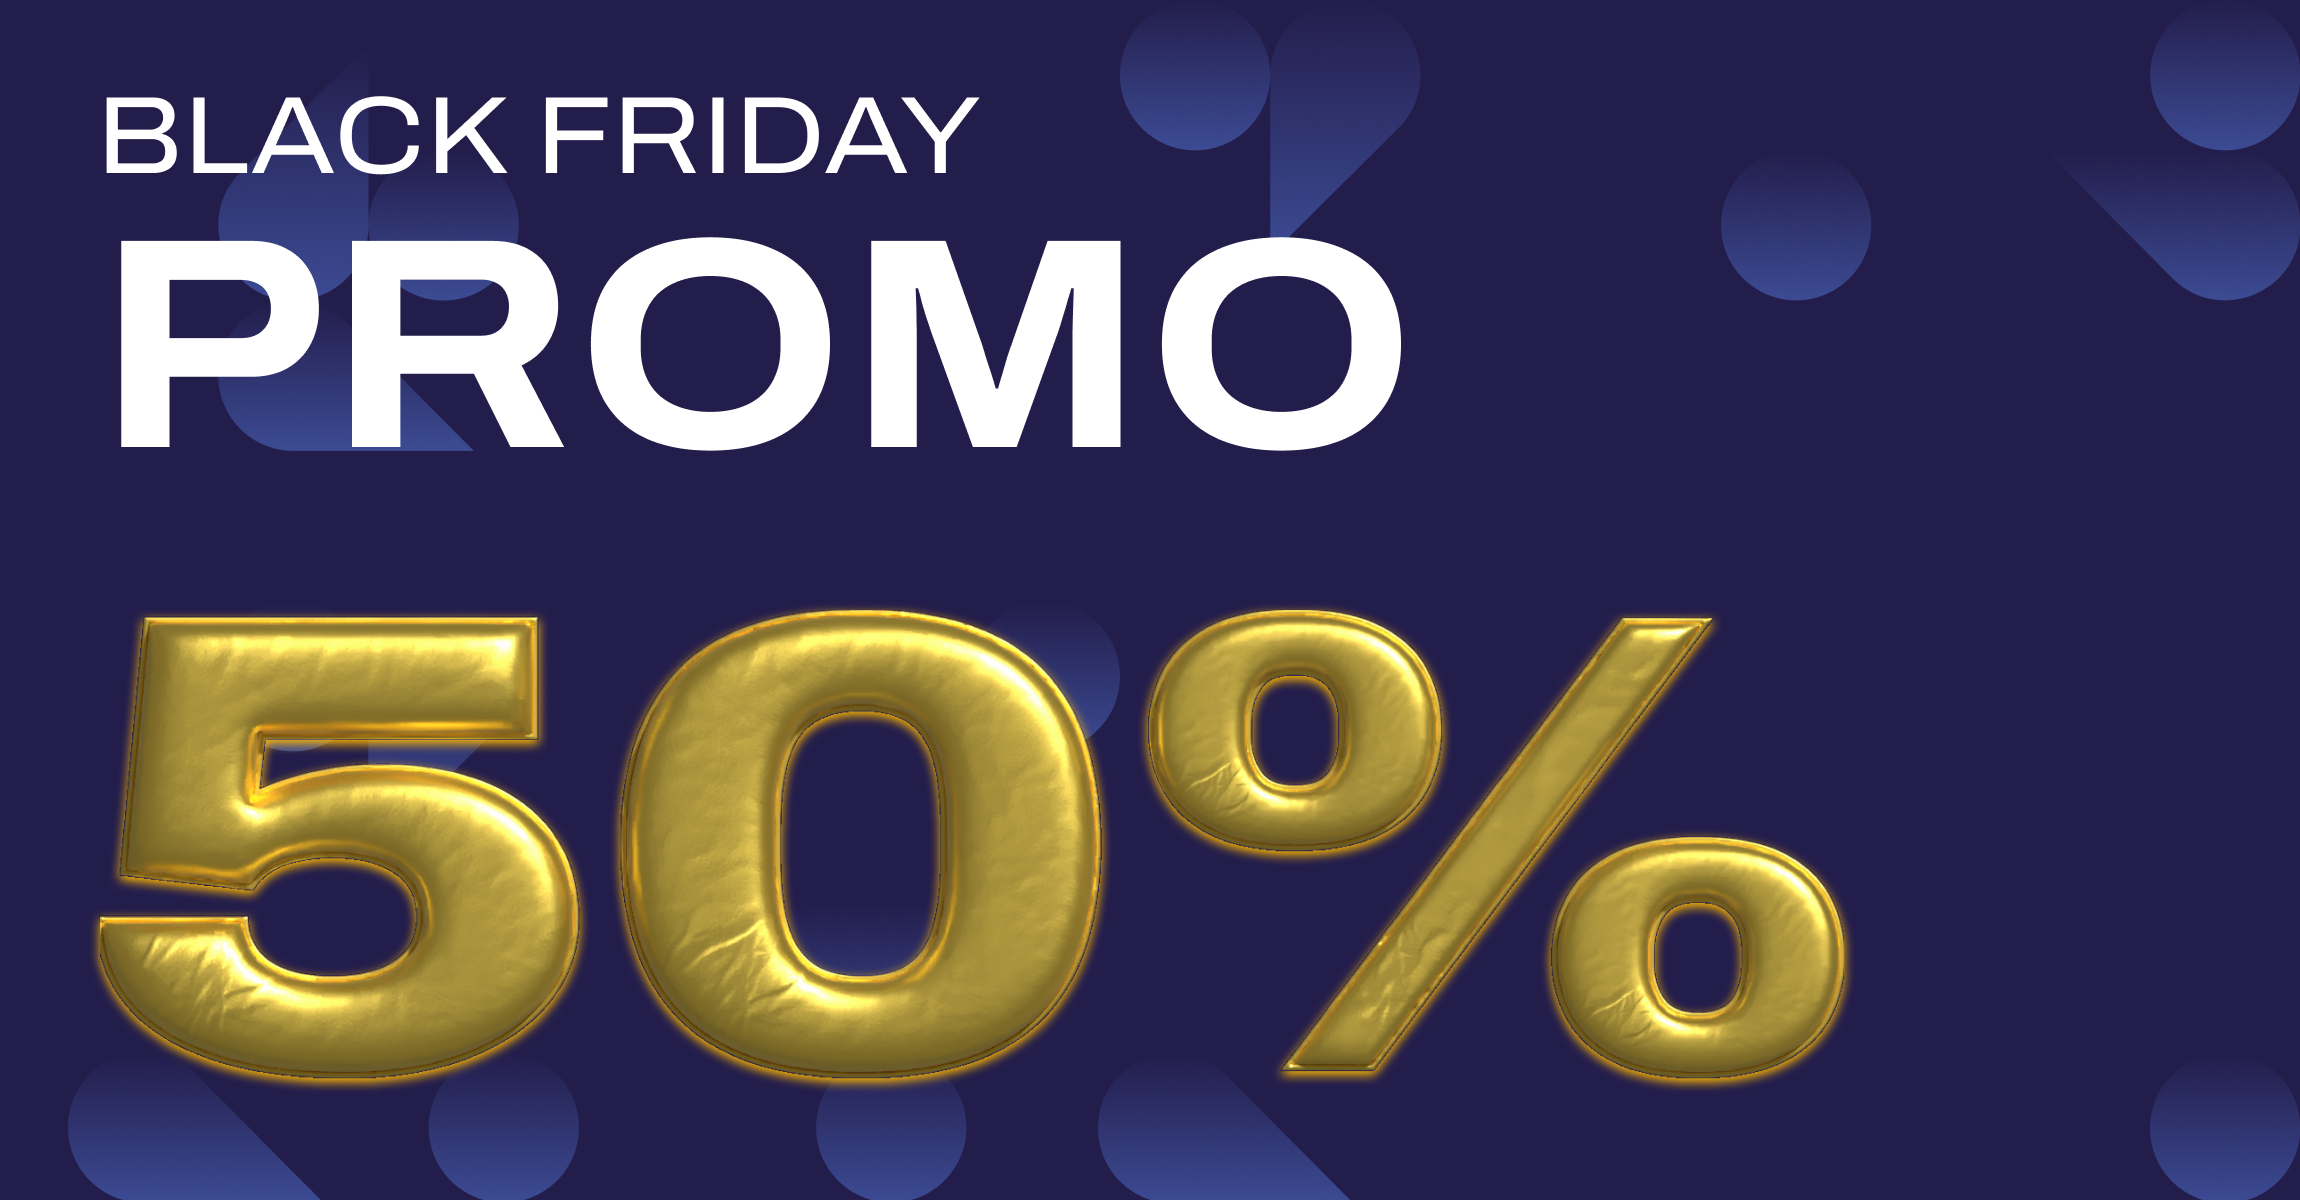 Black Friday Promo 50%